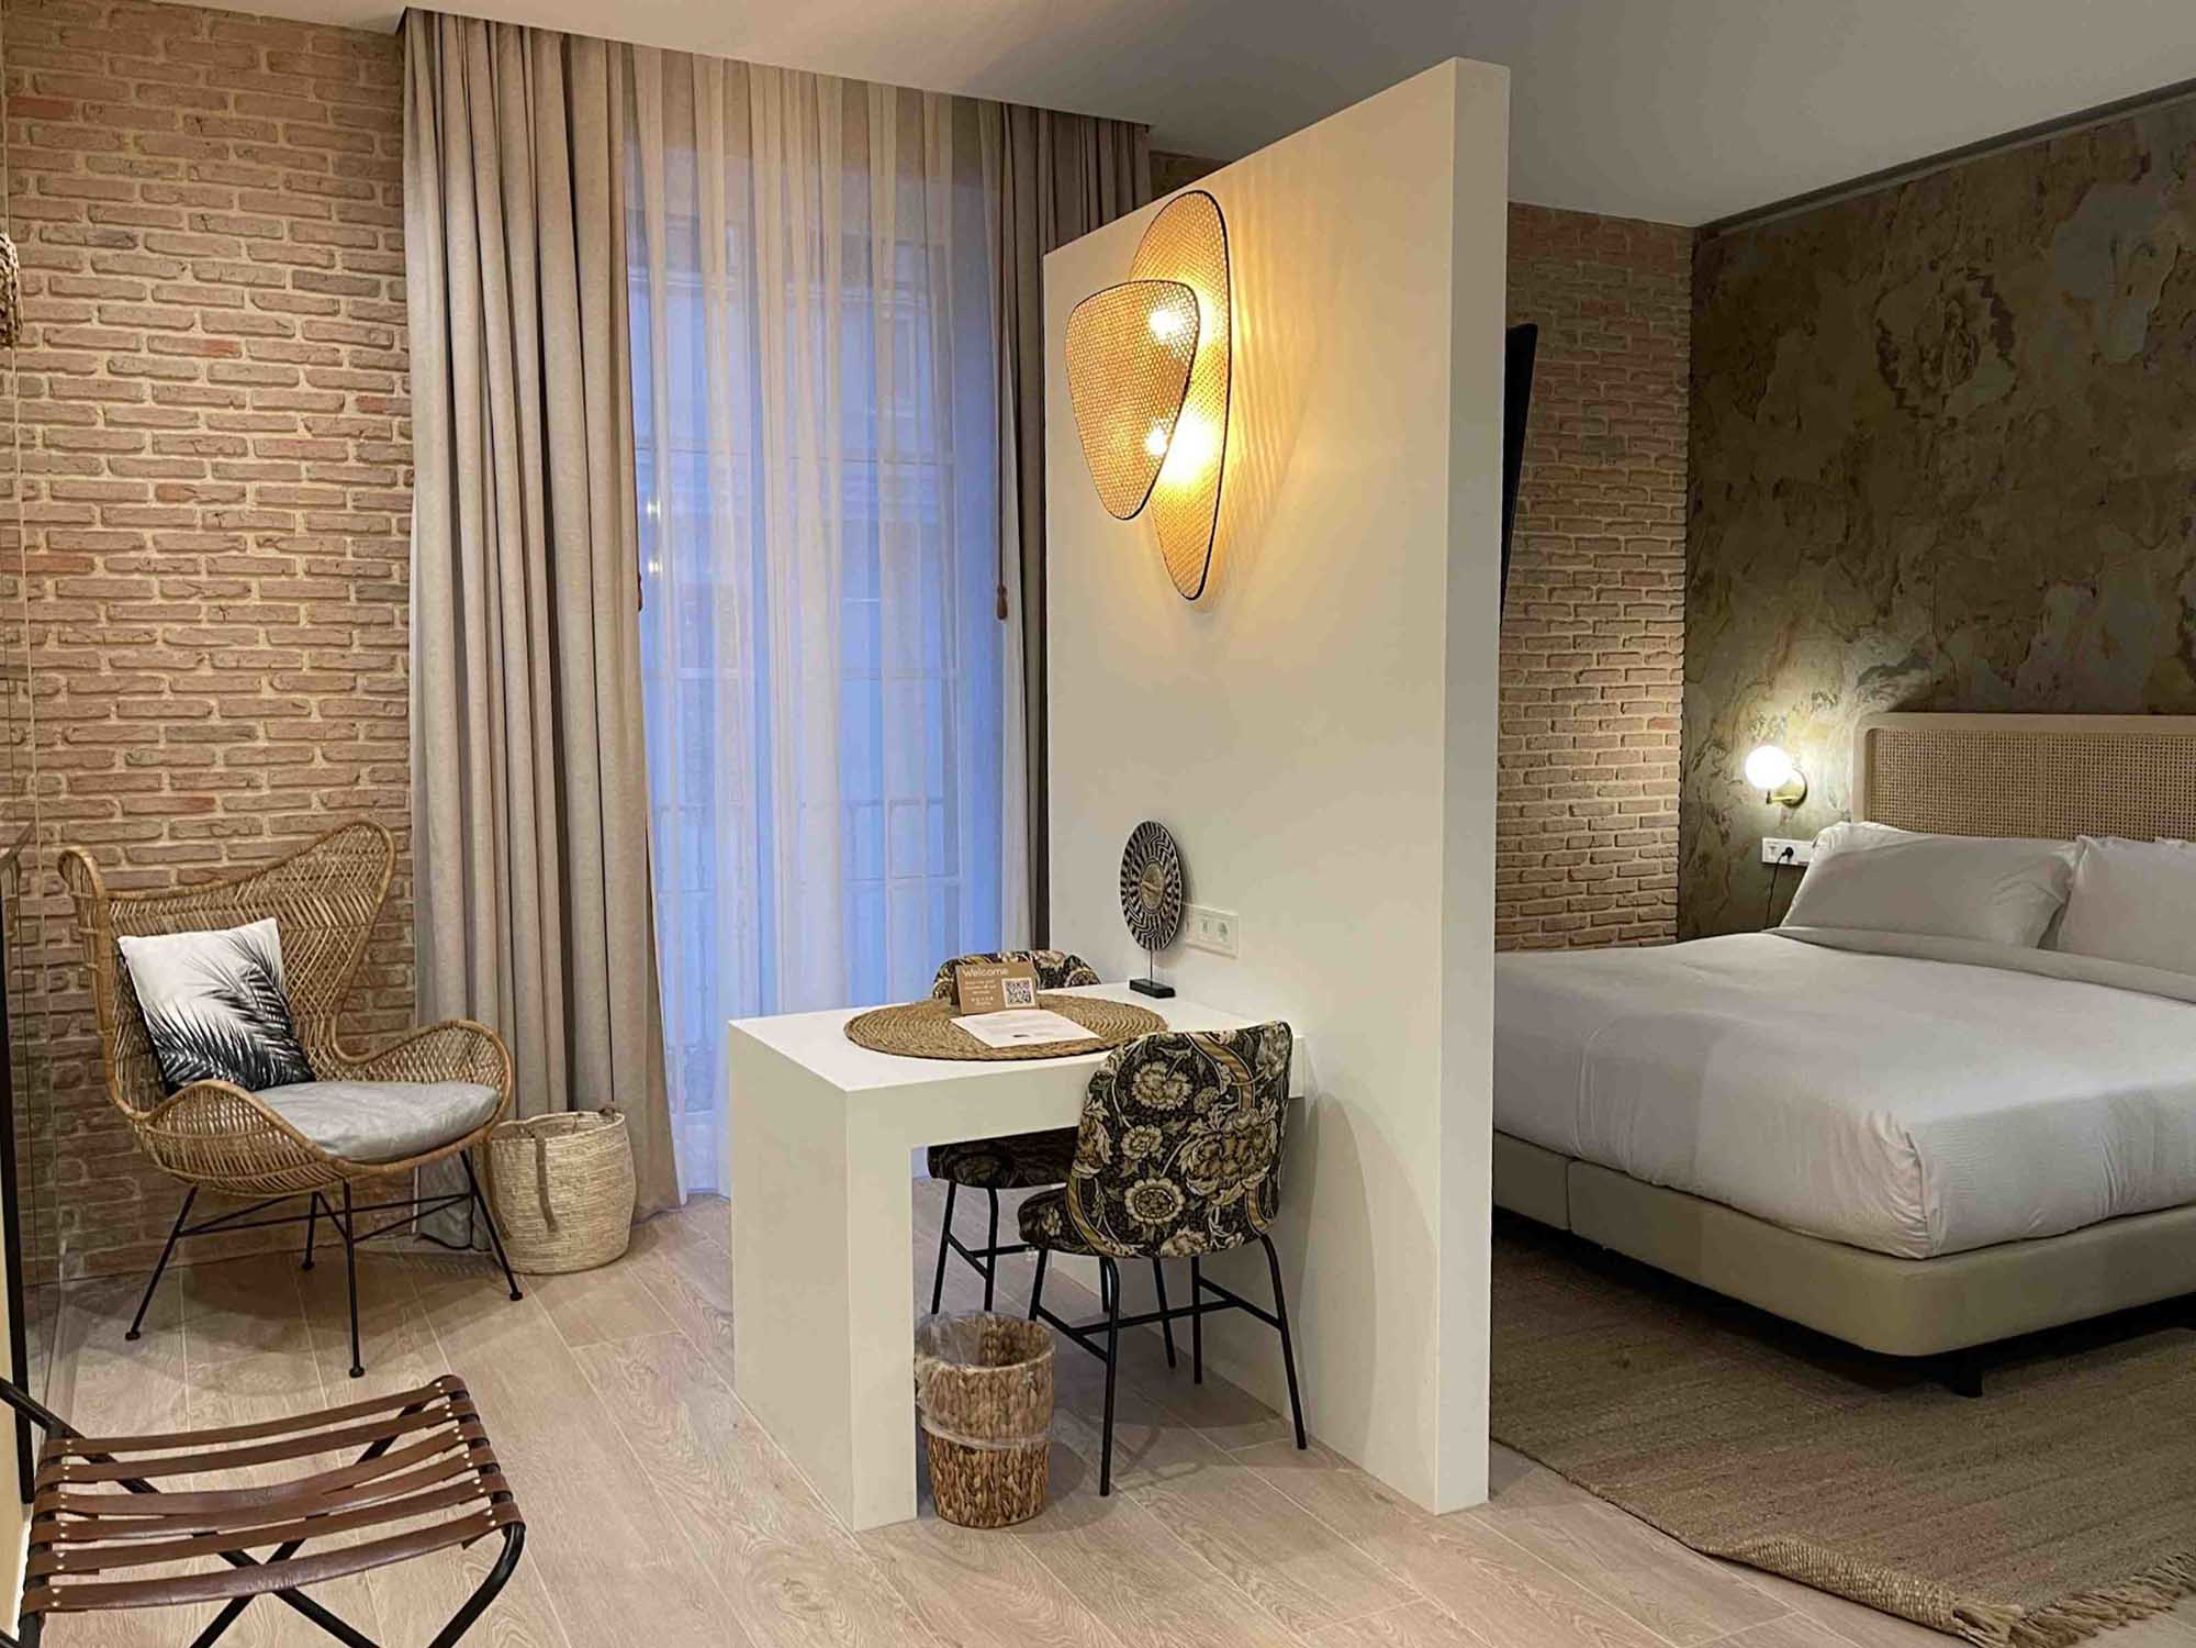 Atocha Hilton Hotel - Best Hotels in Madrid